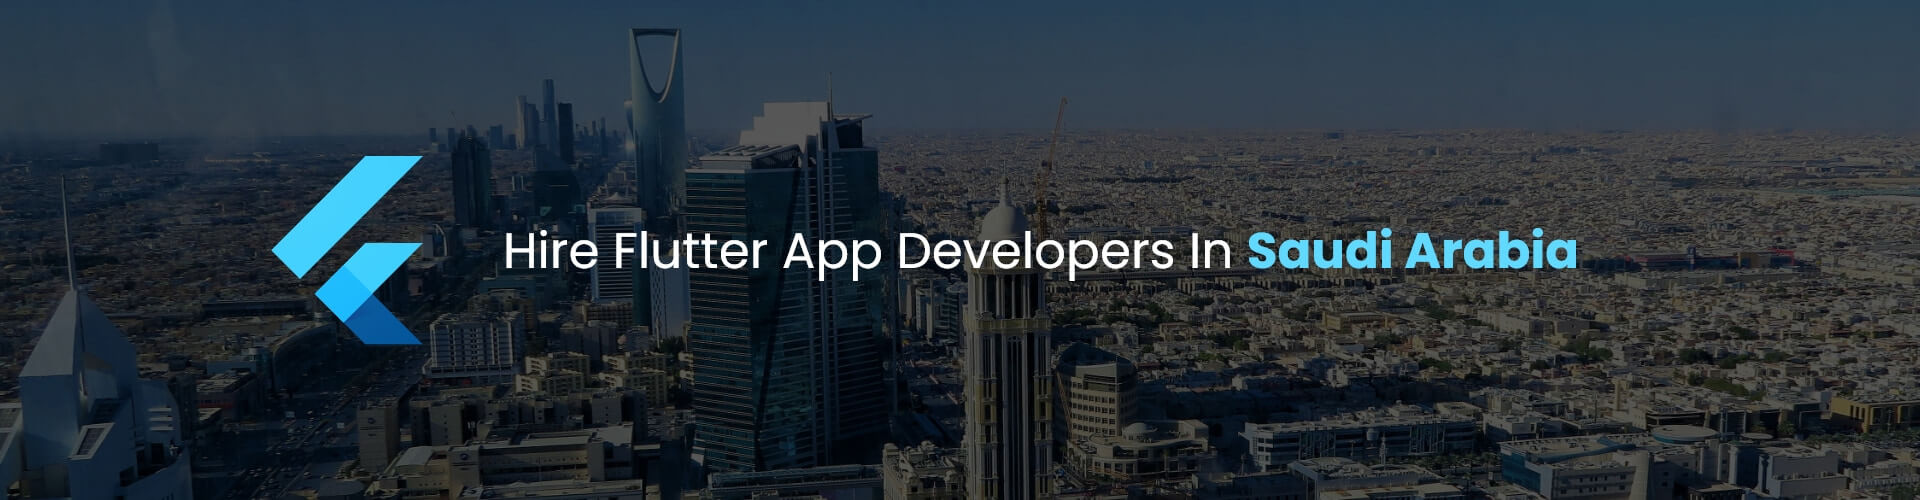 hire flutter app developers in saudi arabia